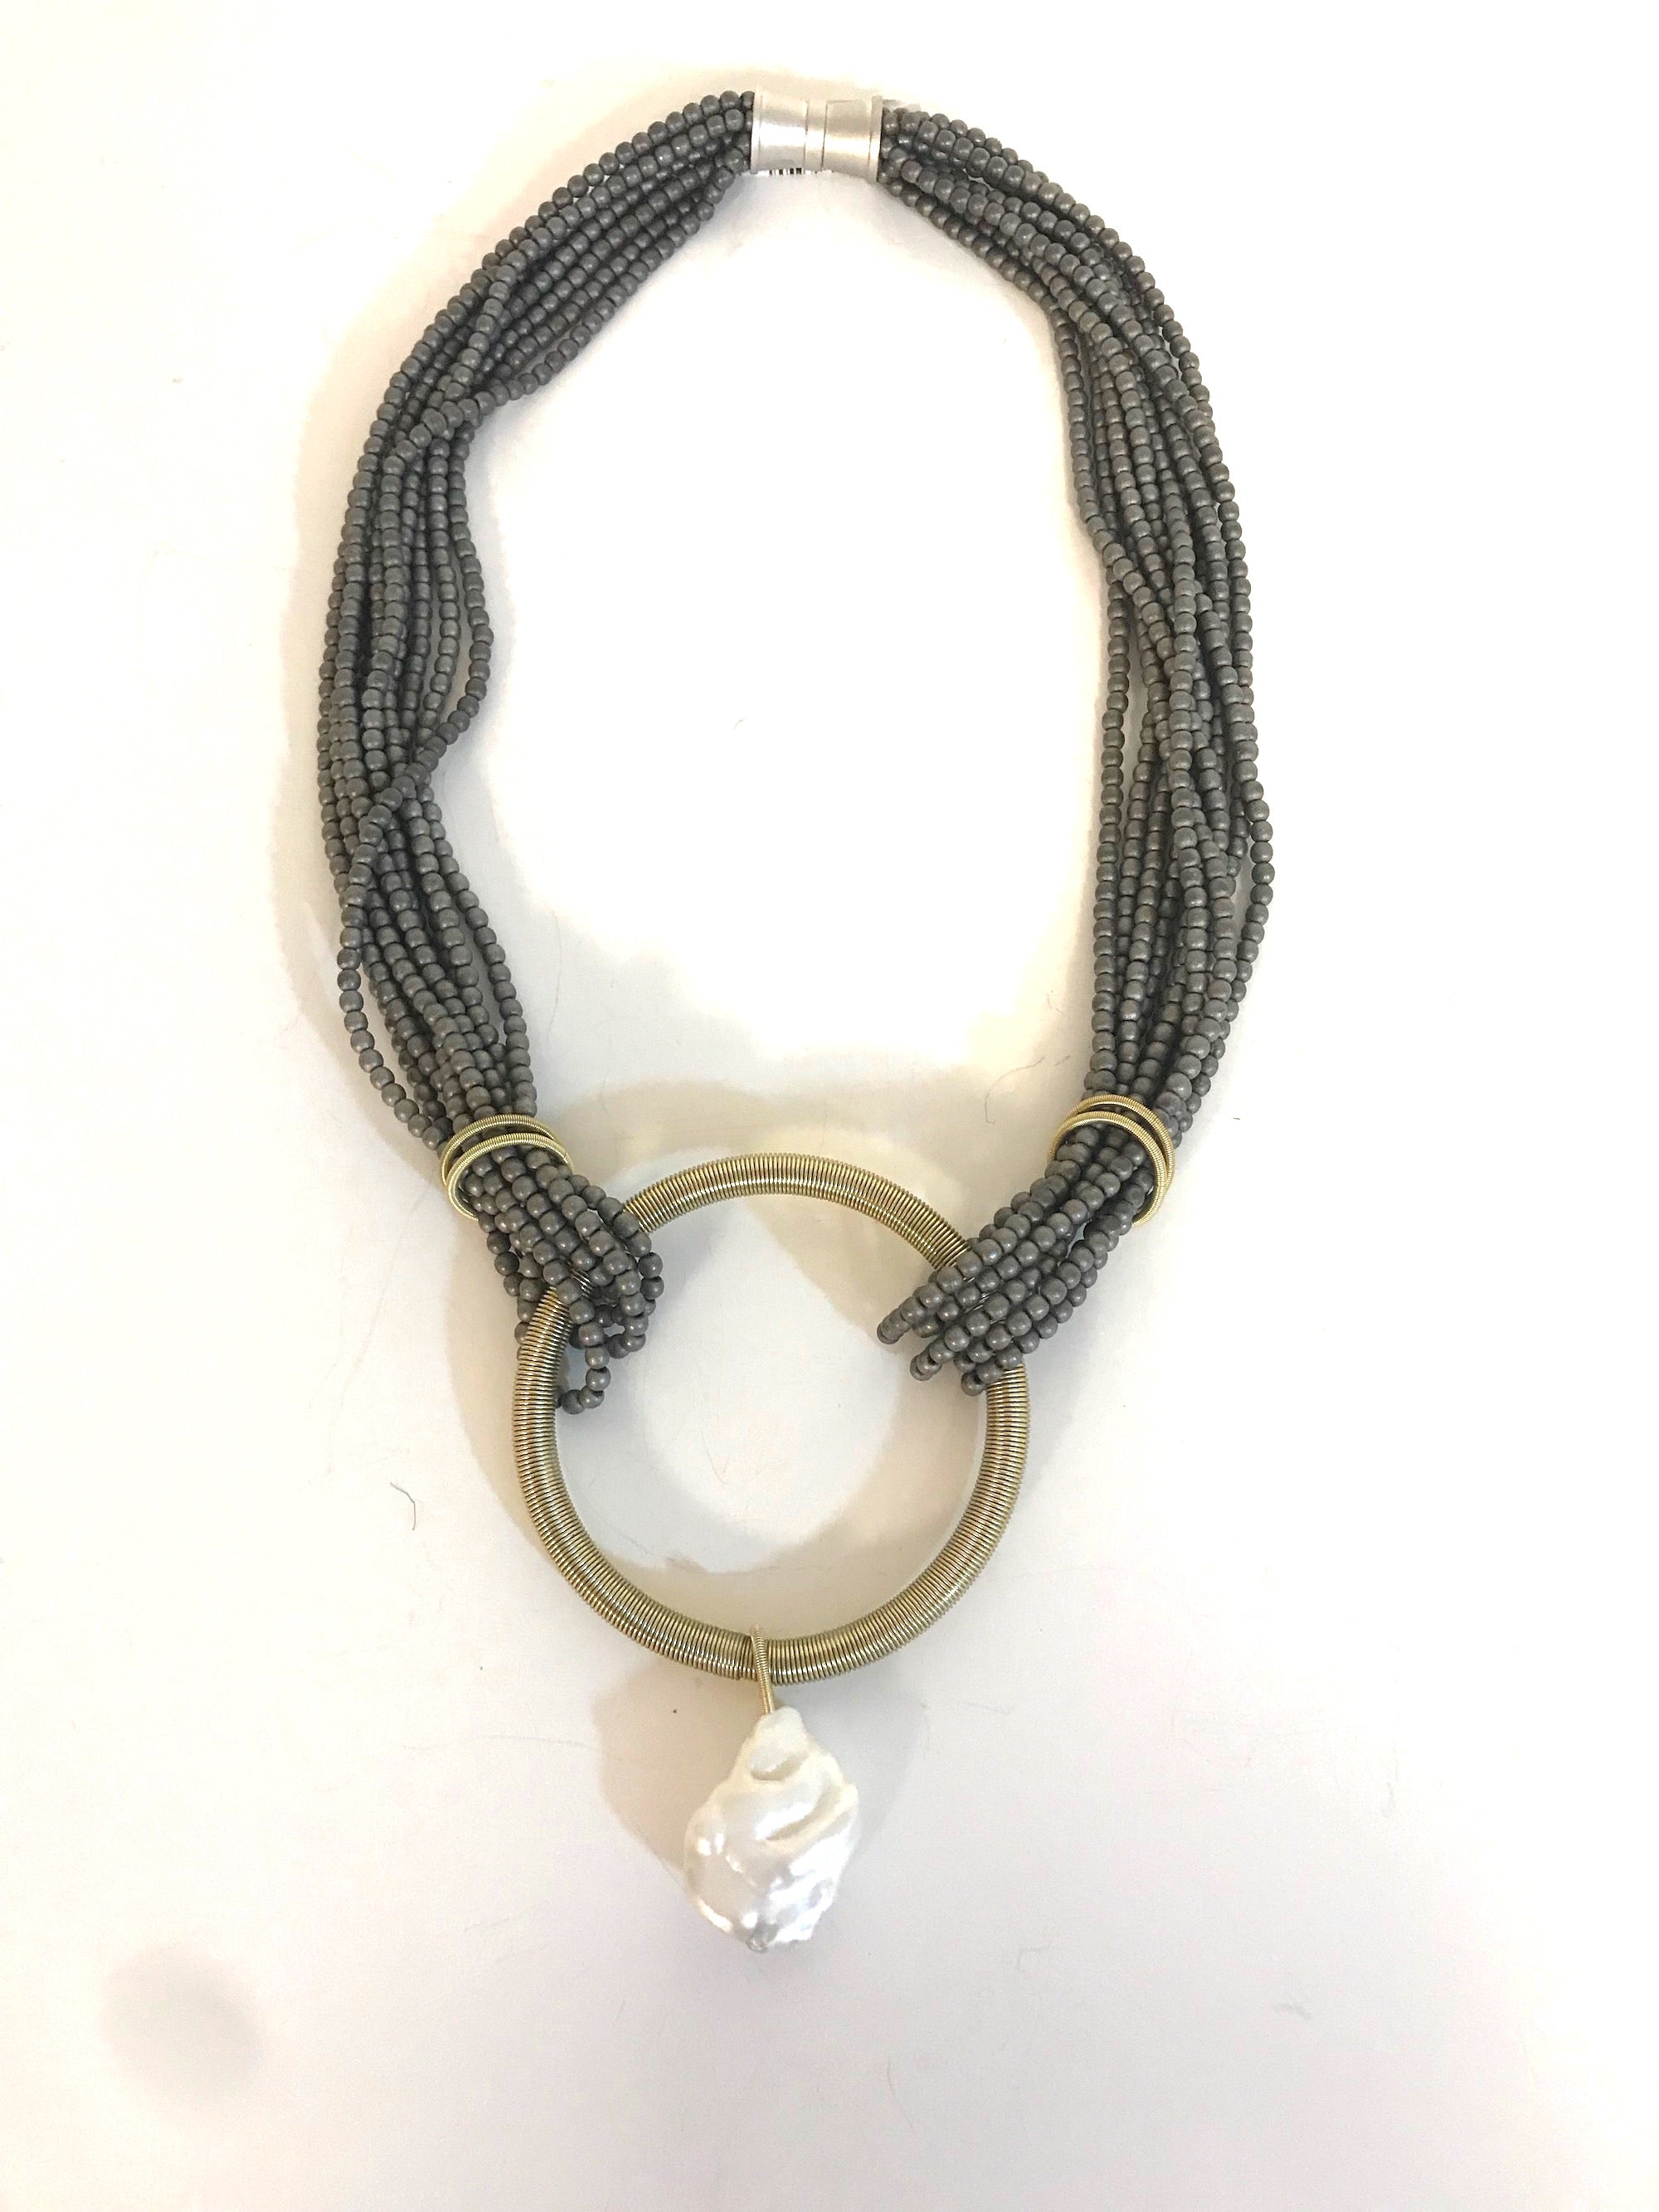 Hematite necklace